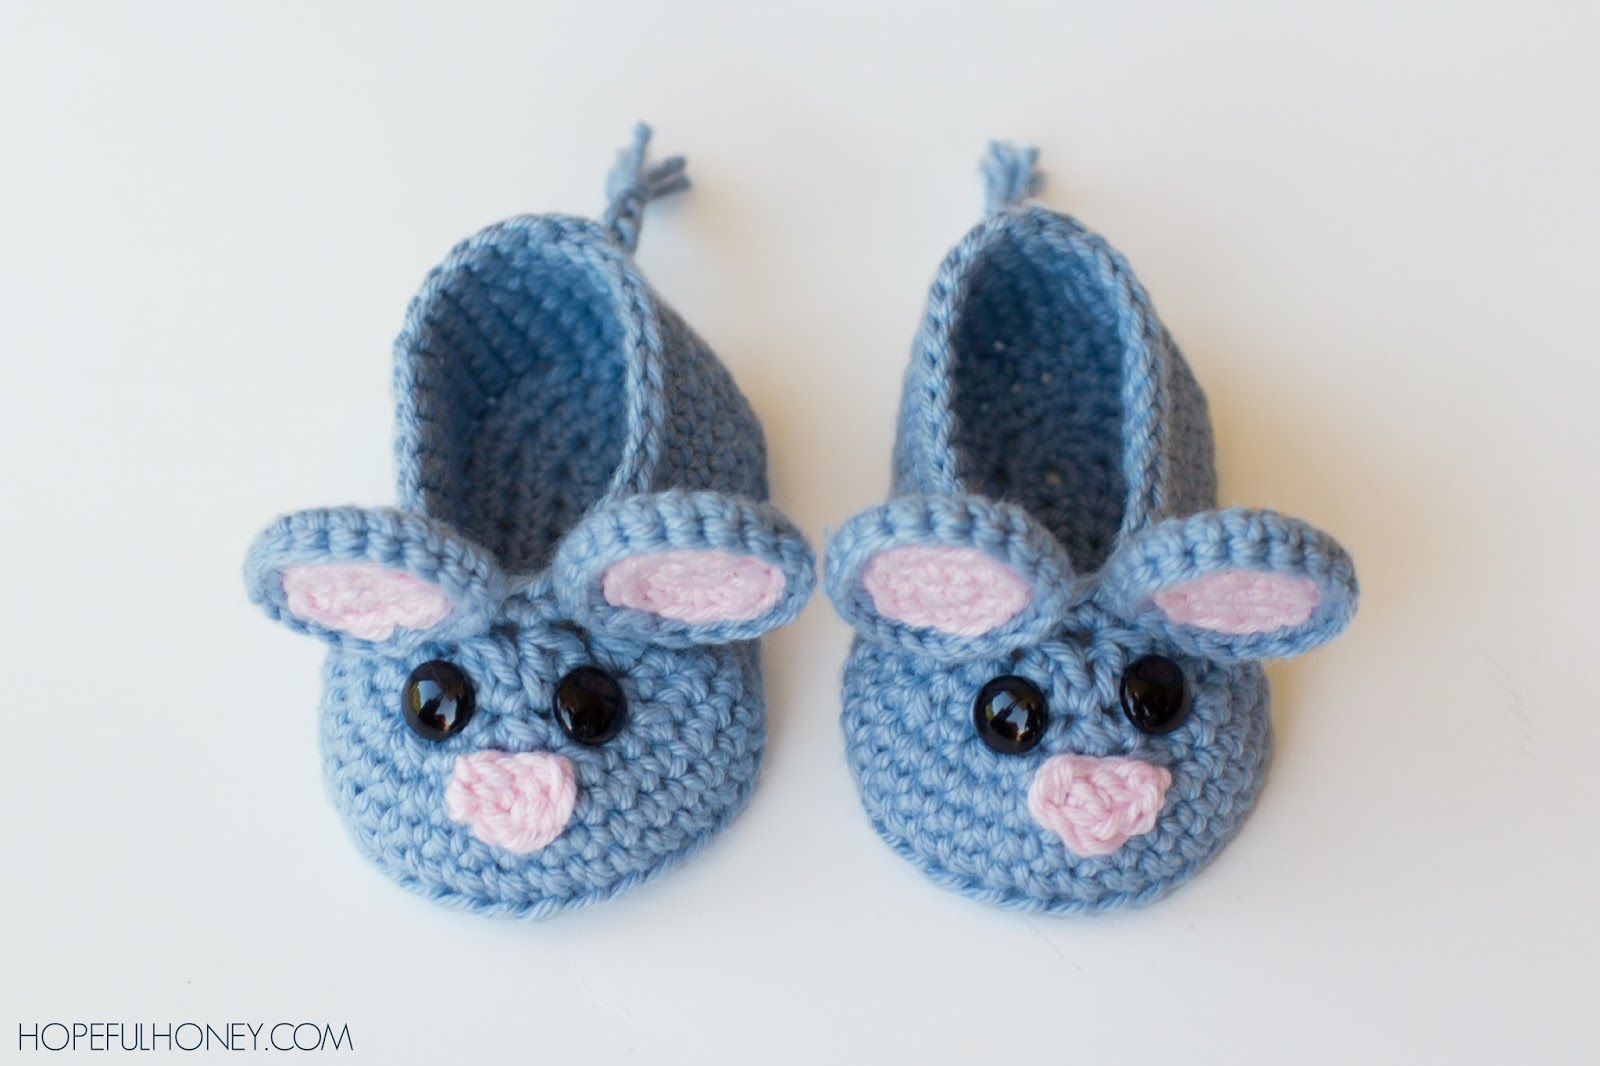   Craft, Crochet, Create: Field Mouse Baby Booties Crochet Pattern